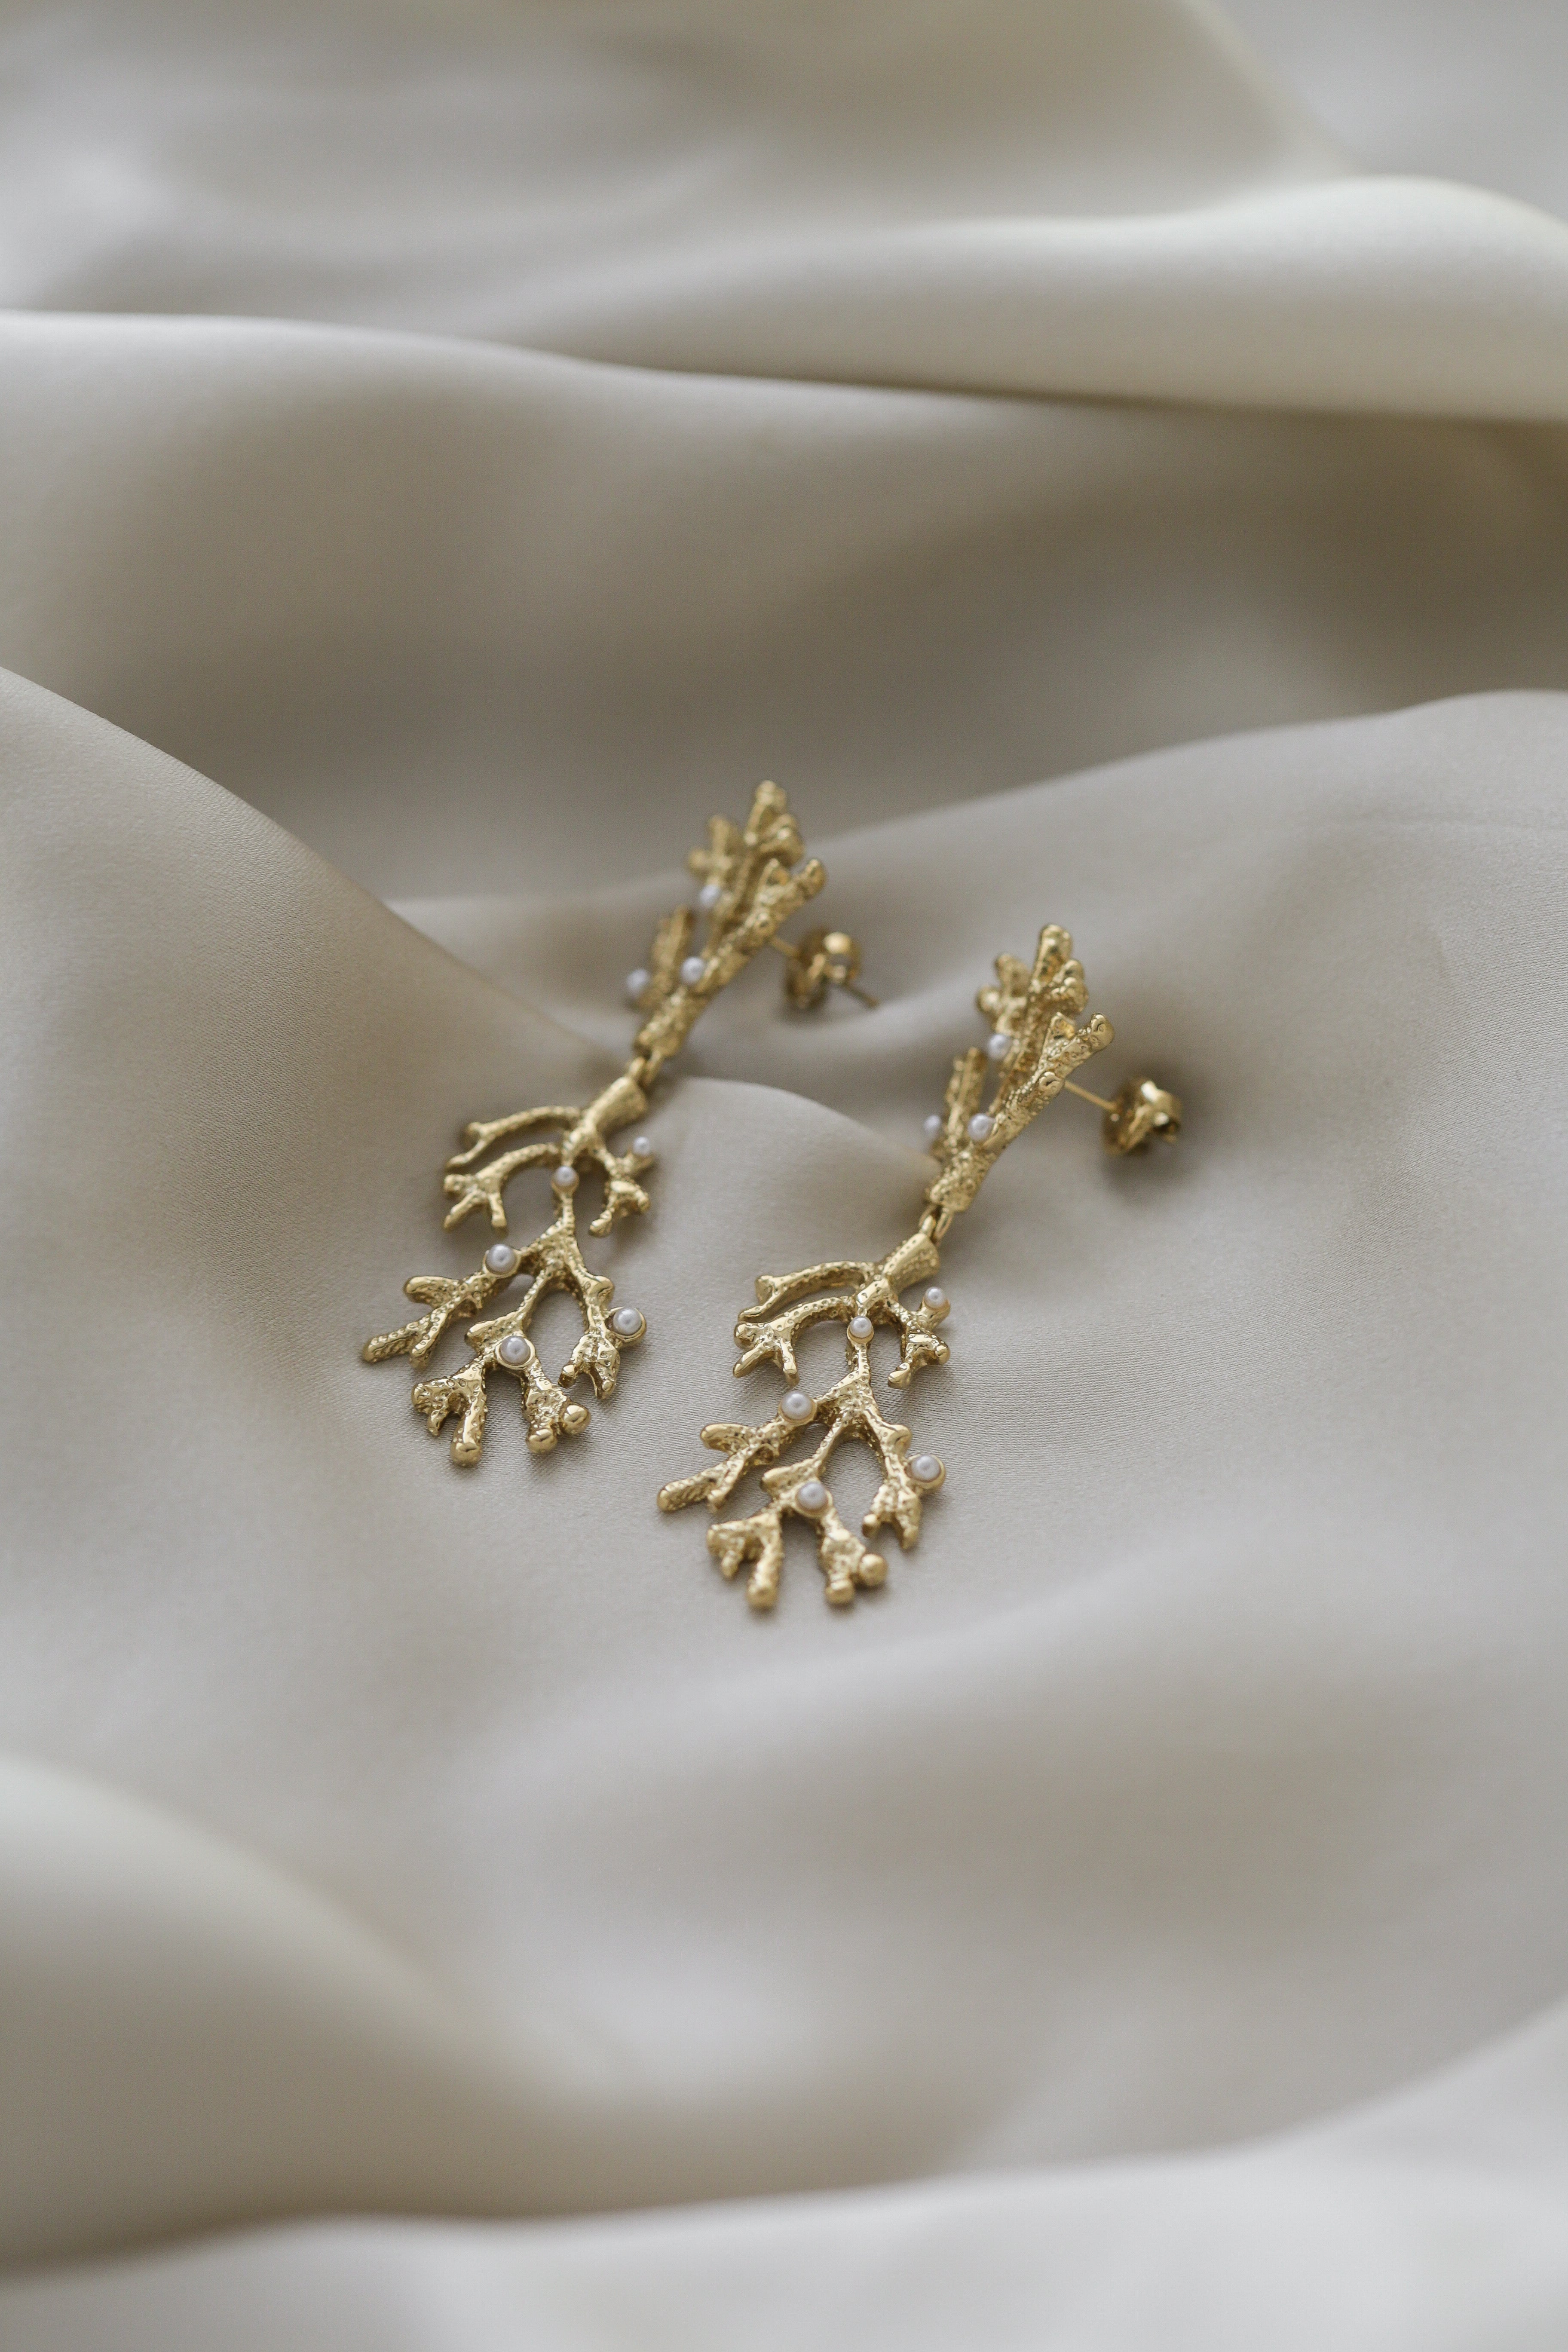 Xabrina Earrings - Boutique Minimaliste has waterproof, durable, elegant and vintage inspired jewelry